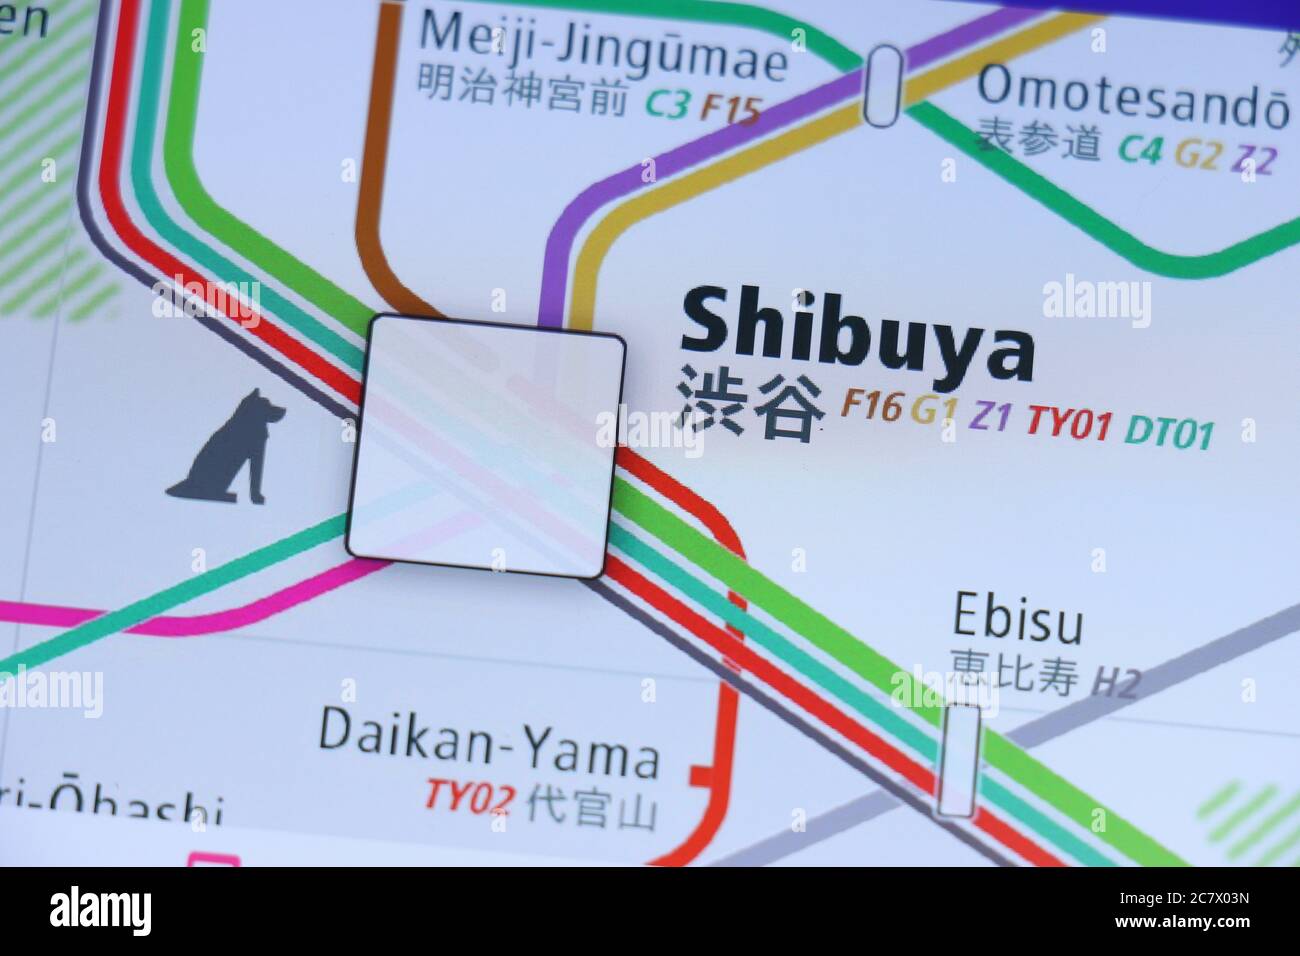 Shibuya station on Tokyo subway map on smartphone screen. Stock Photo